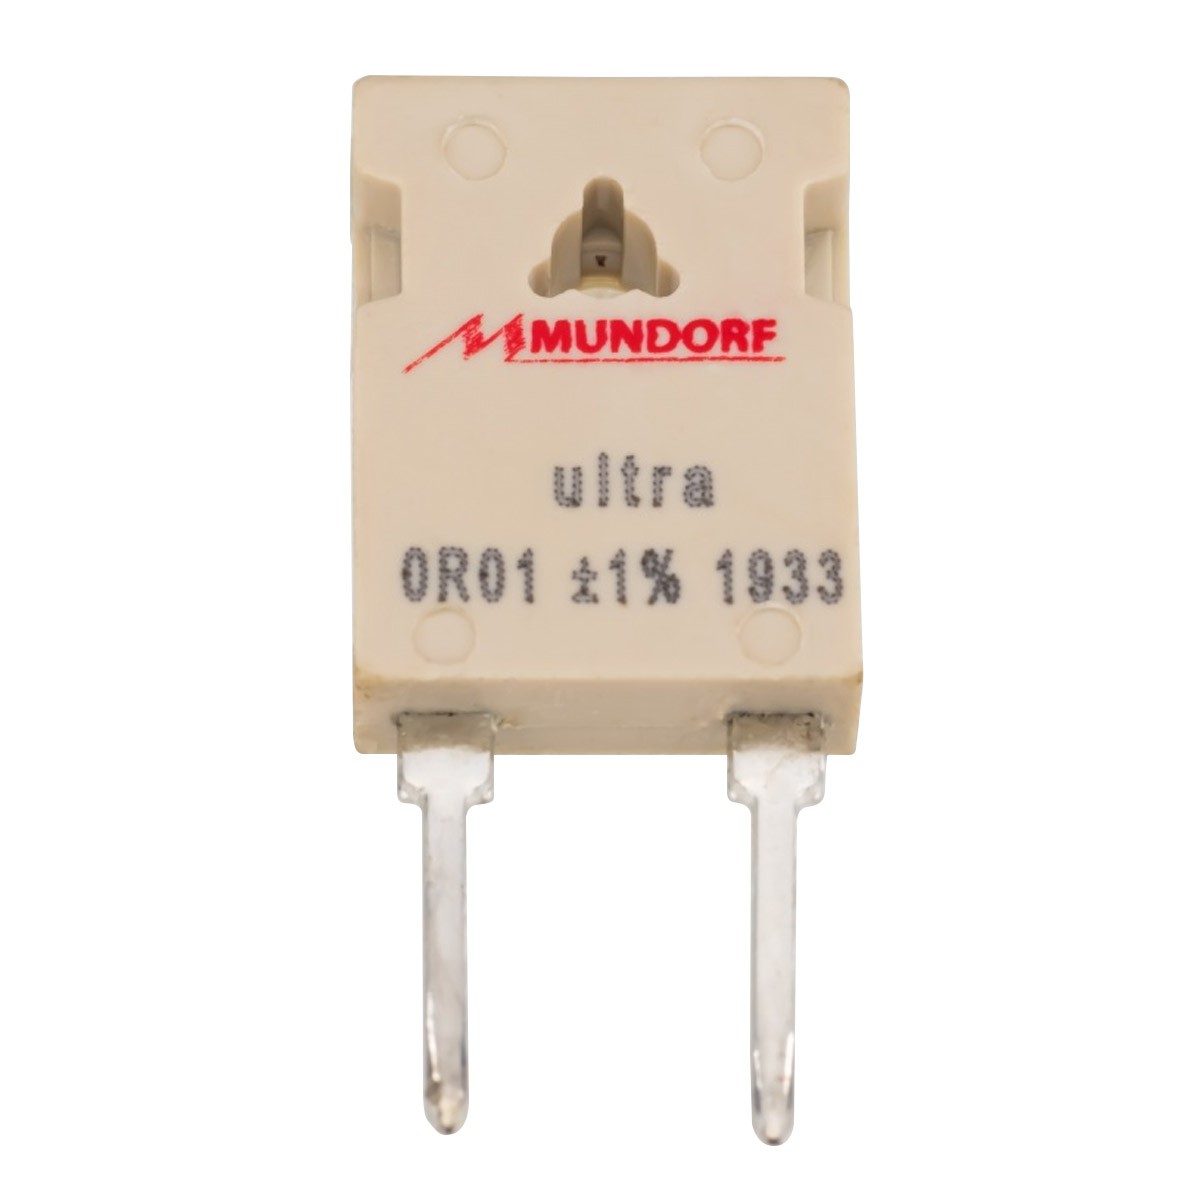 MUNDORF MRESIST ULTRA Resistor 30W 0.01 Ohm